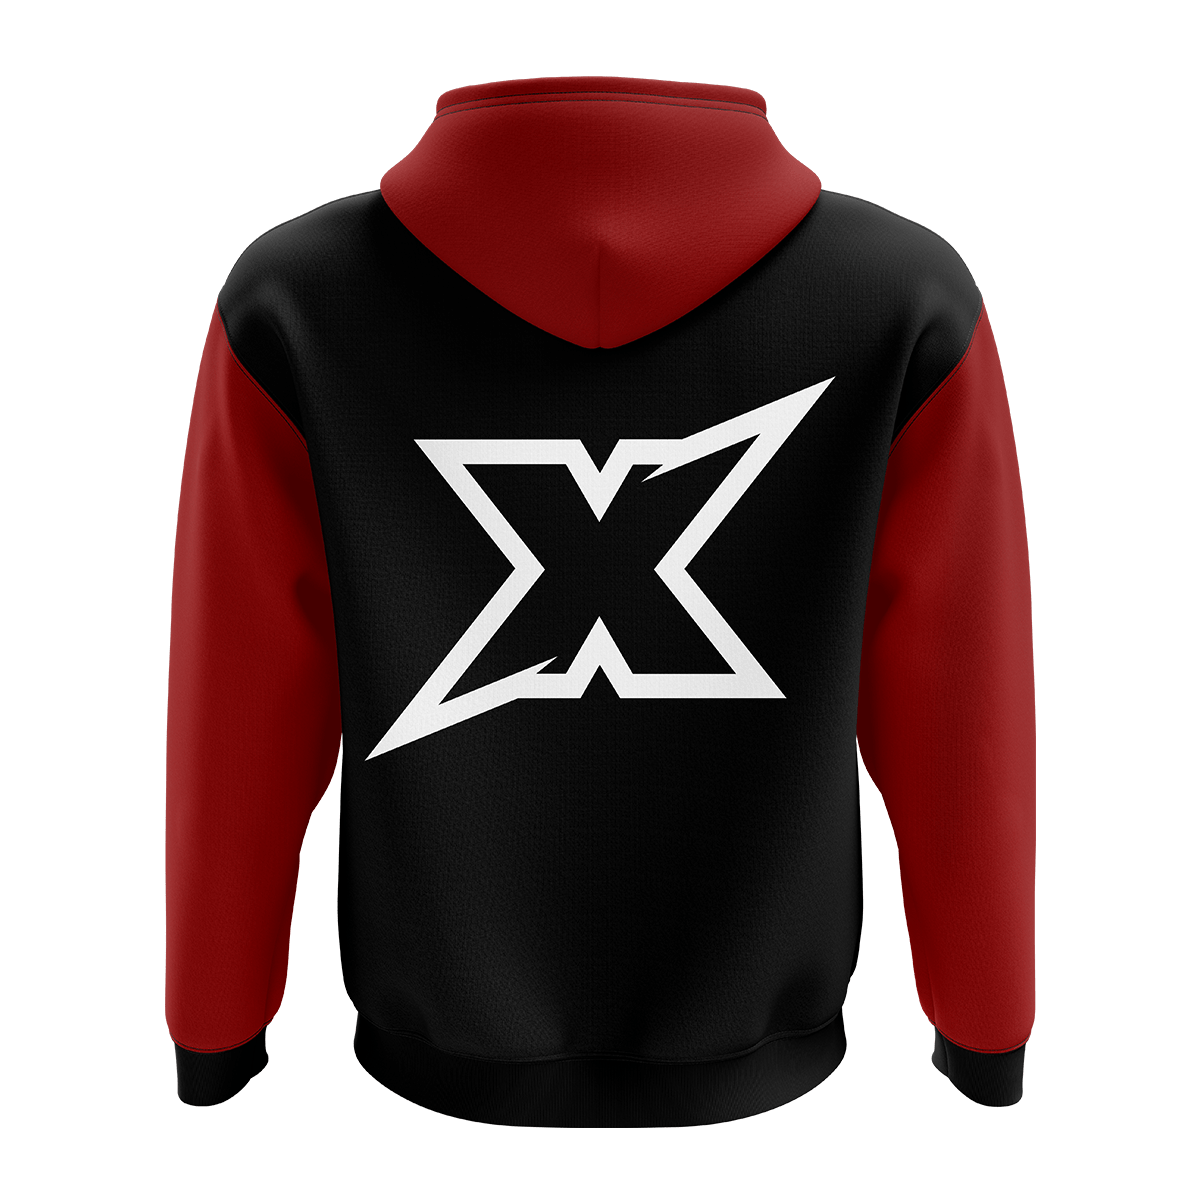 XFIGHTERS - Crew Zipper 2021